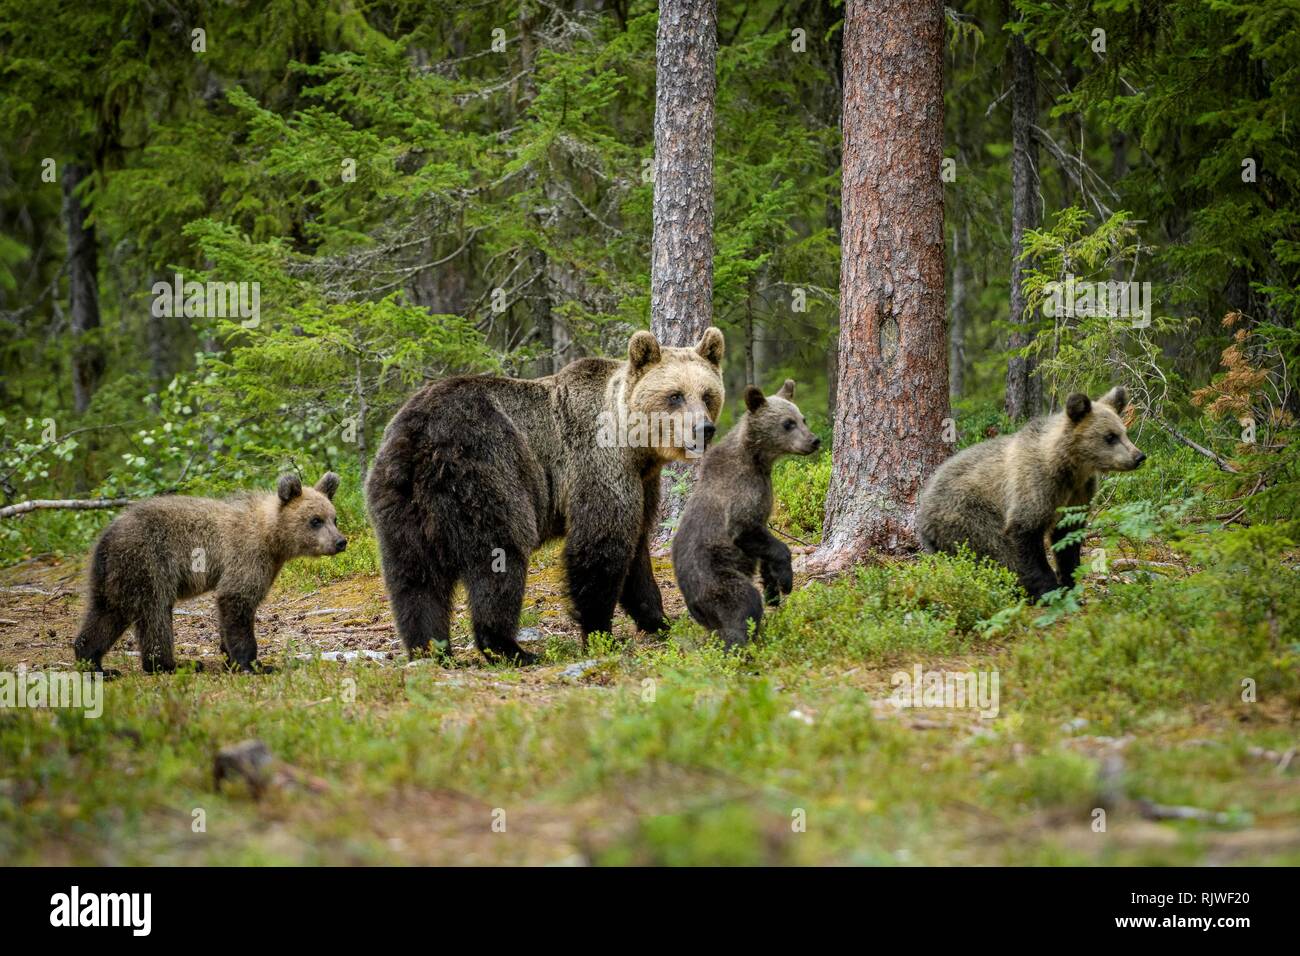 European brown bear (Ursus arctos arctos) in the forest, mother animal with three young animals, Suomussalmi, Kainuu, Finland Stock Photo